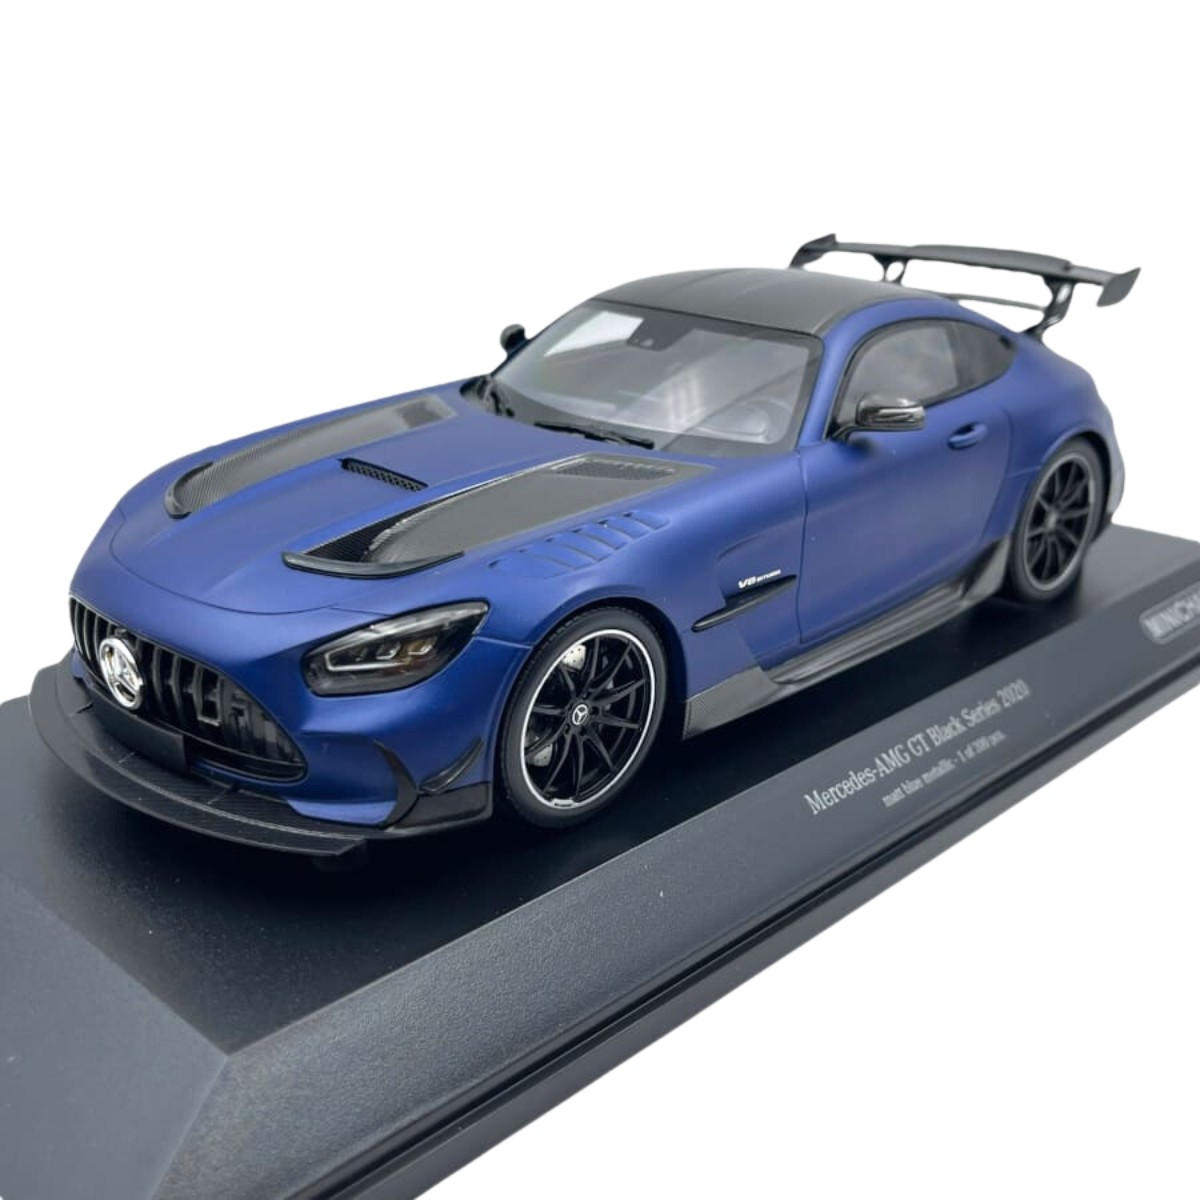 MERCEDES-AMG GT BLACK SERIES - 2020 - MATT BLUE METALLIC - 1:18 Scale Diecast Model Car